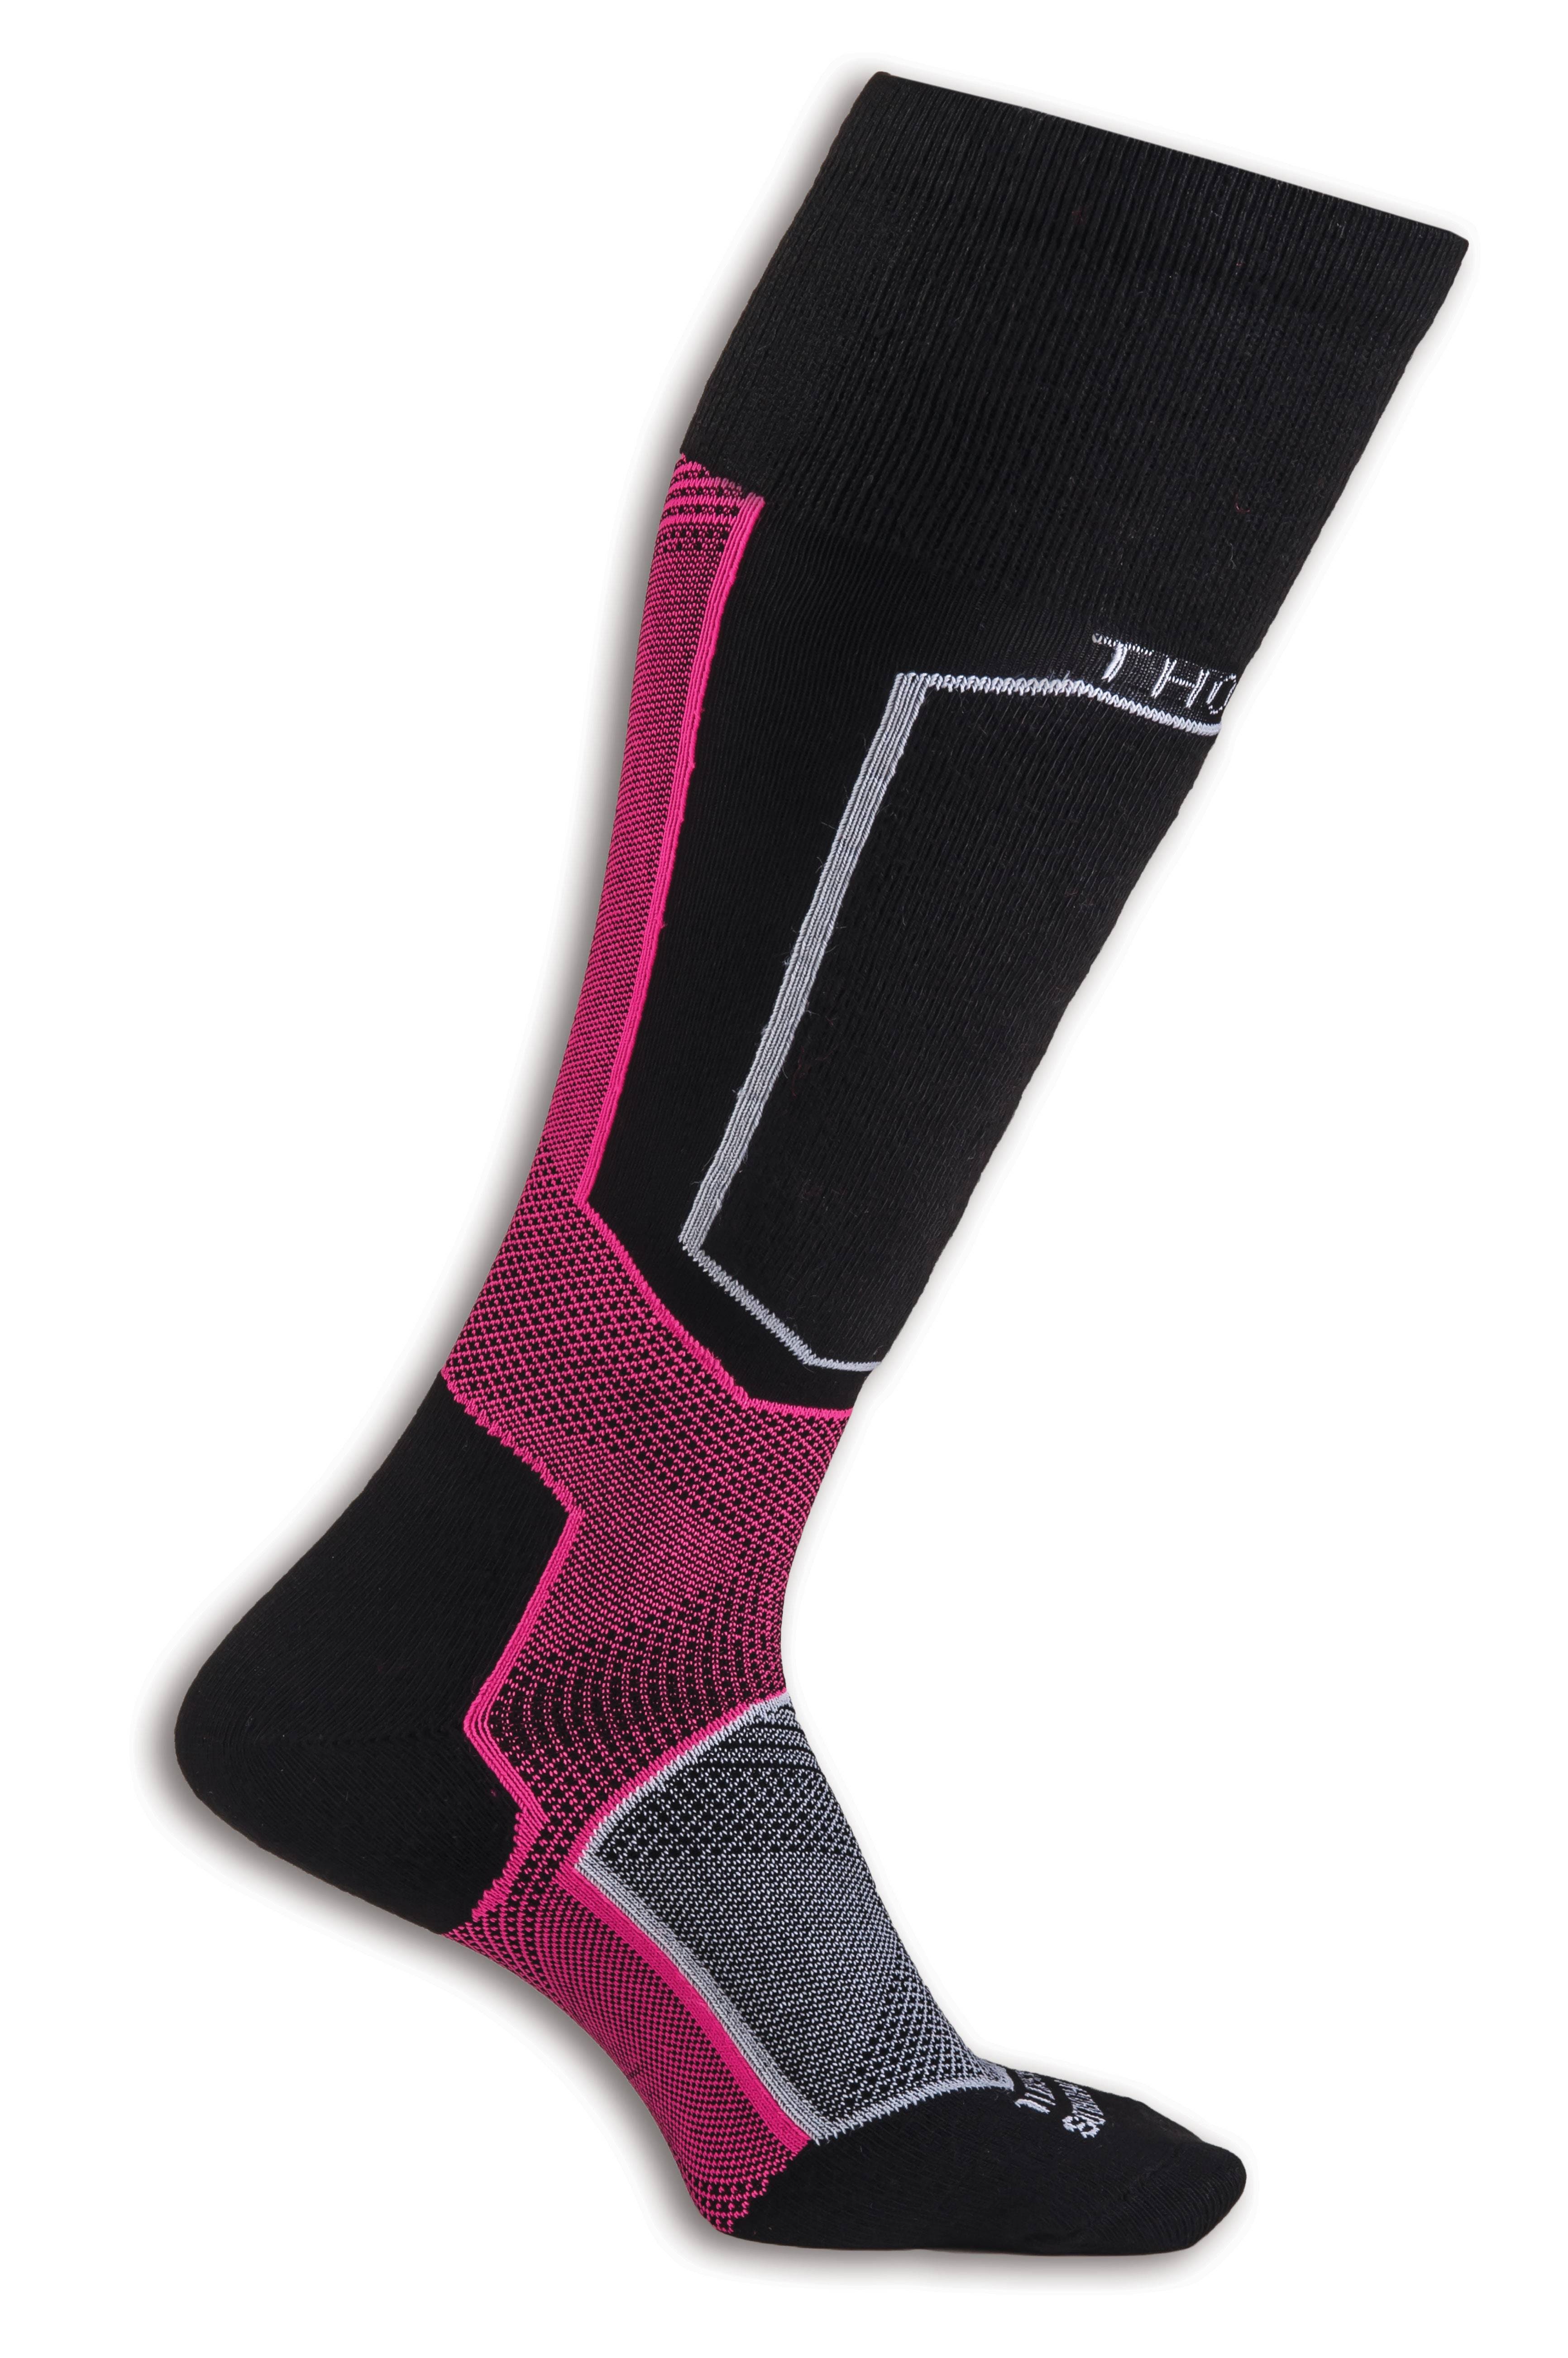 Thorlo Extreme Custom Ski - Pink/Black, Medium